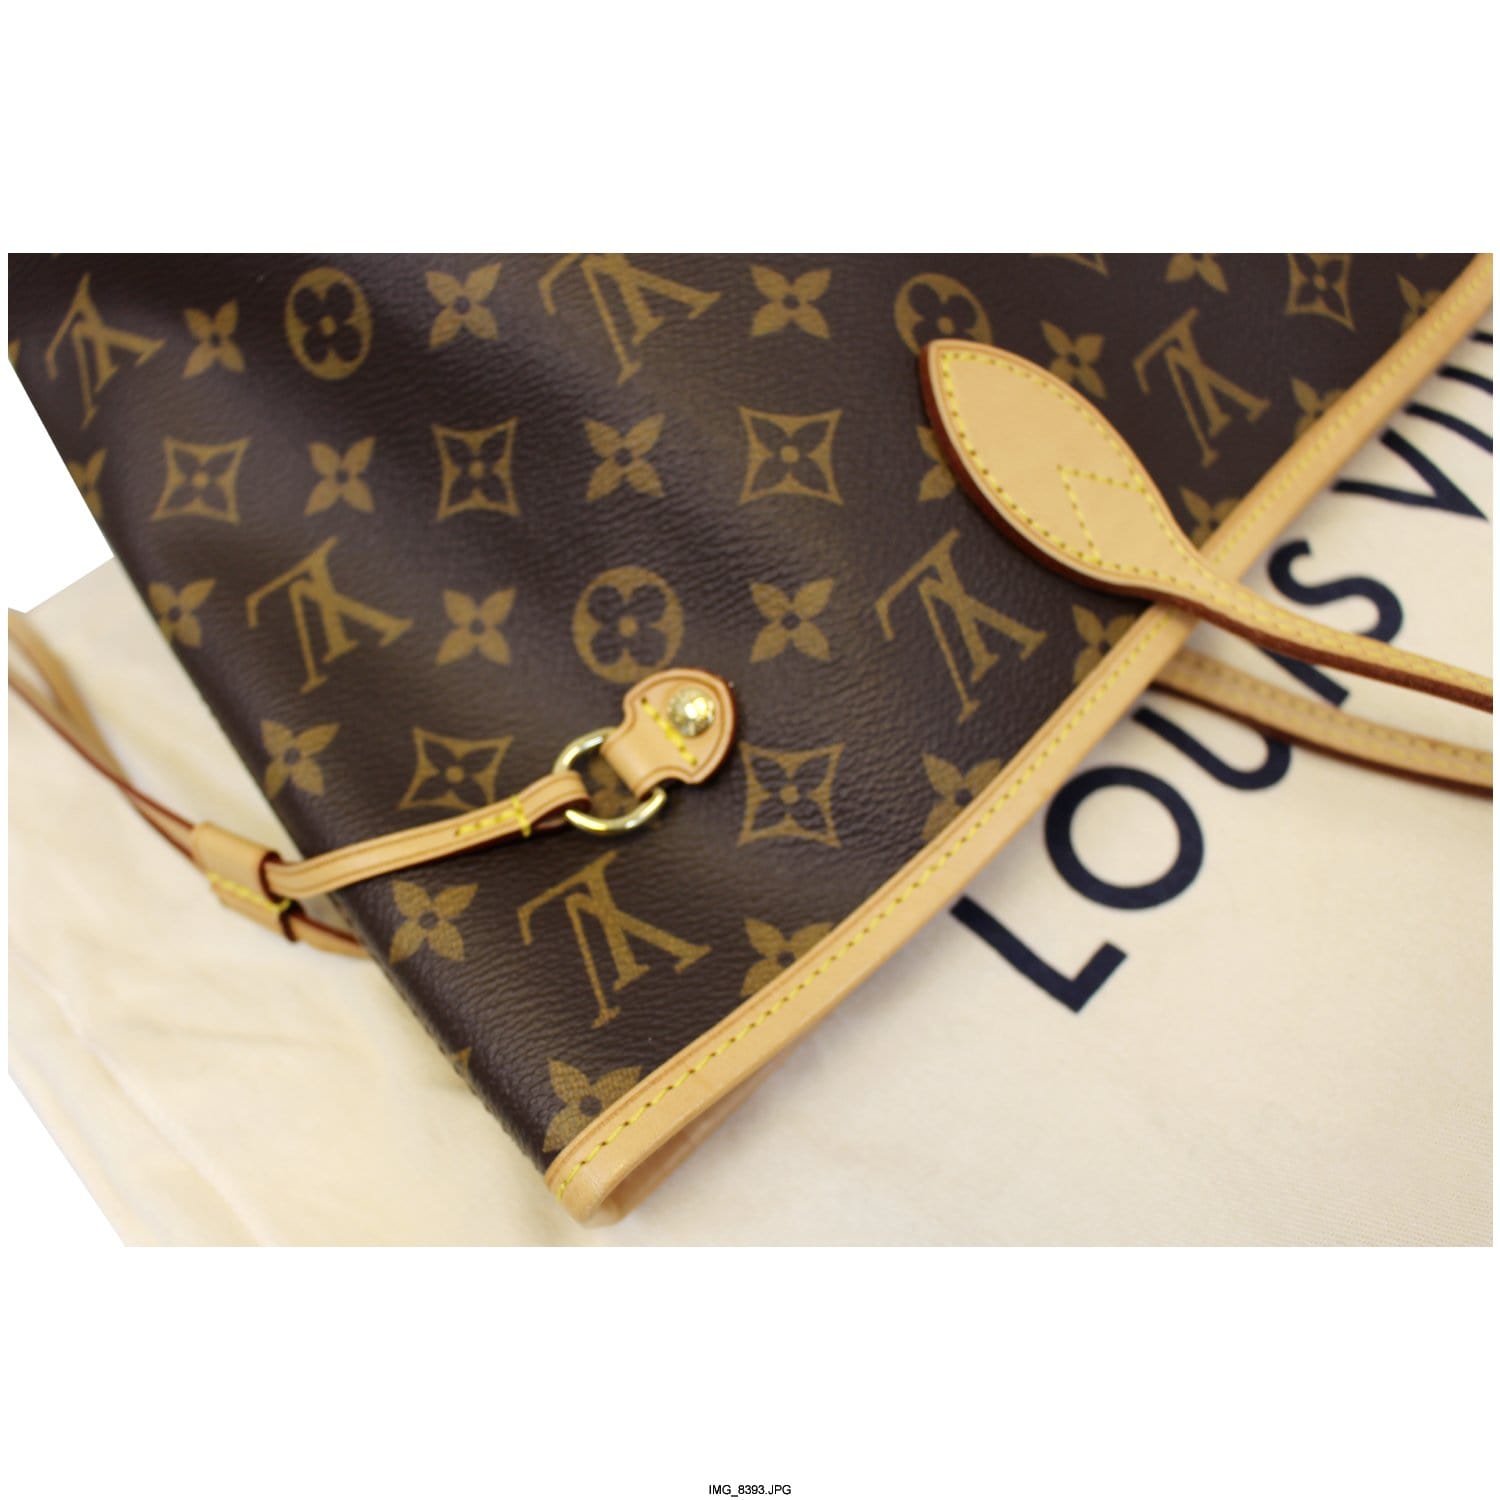 Louis Vuitton Neverfull MM monogram rose ballerine shoulderbag